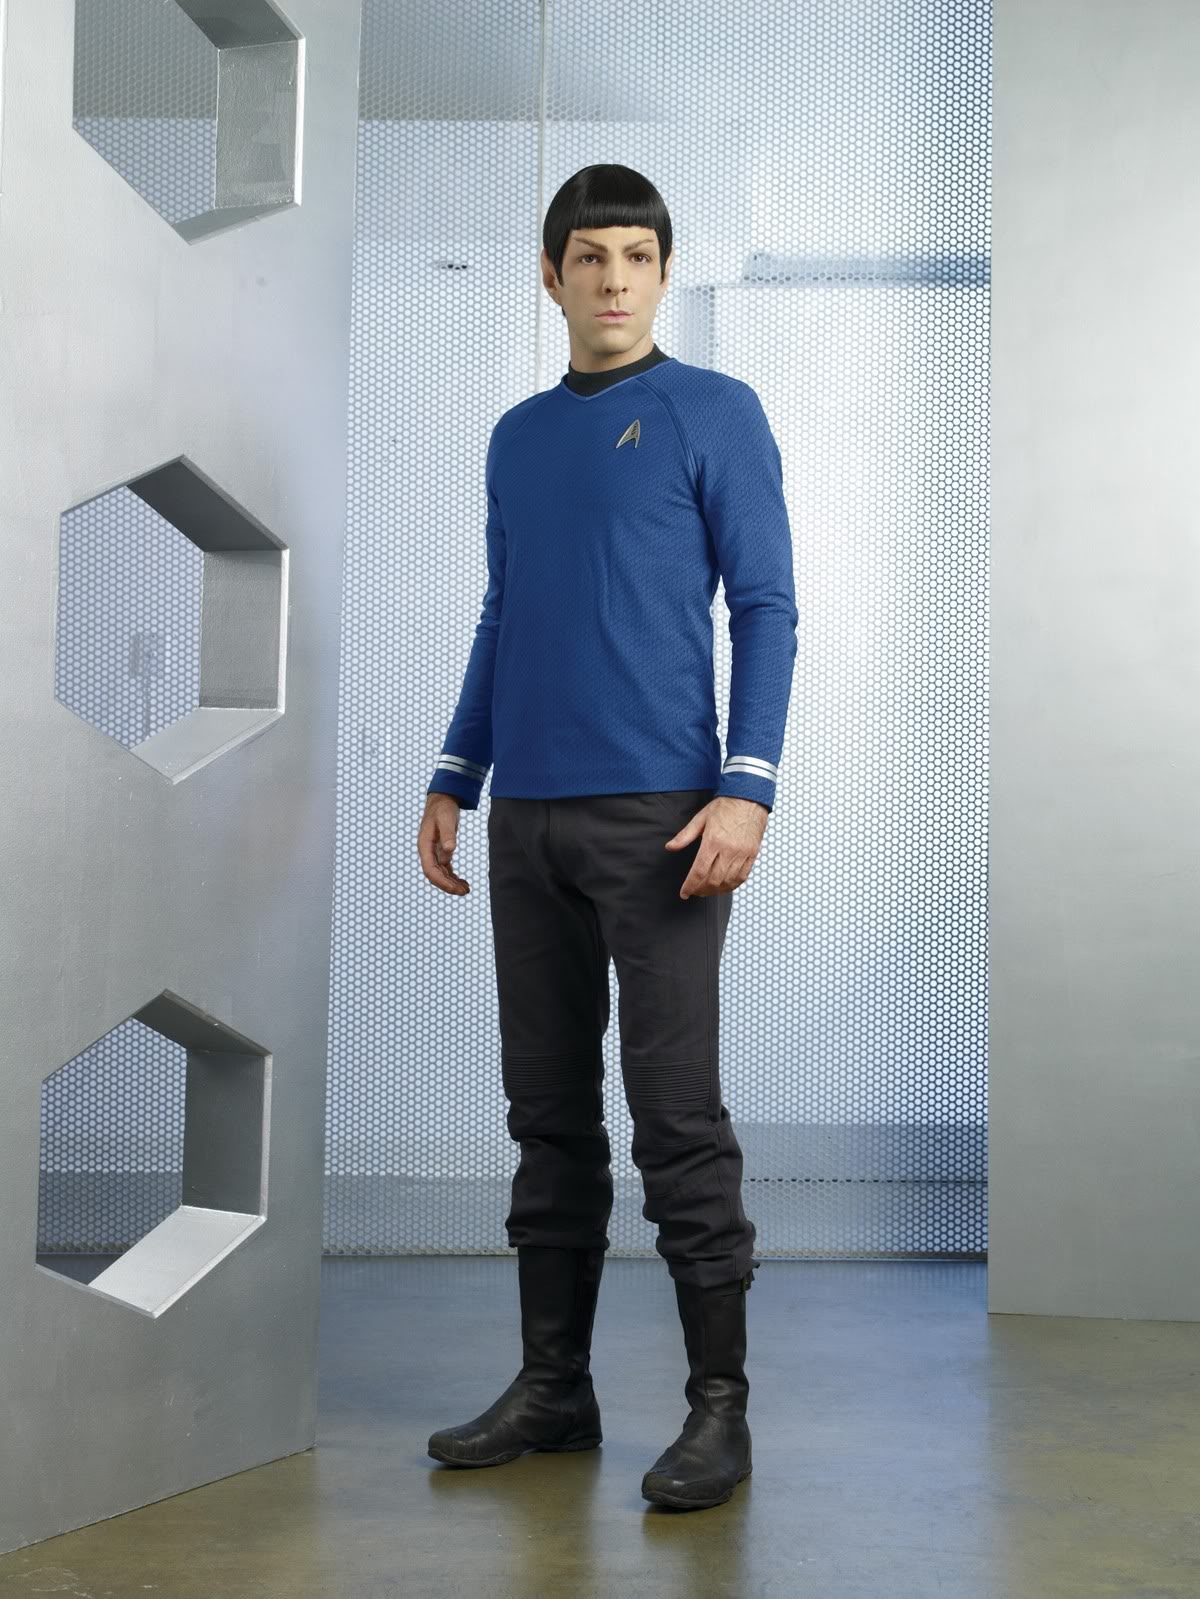 Zachary Quinto Spock